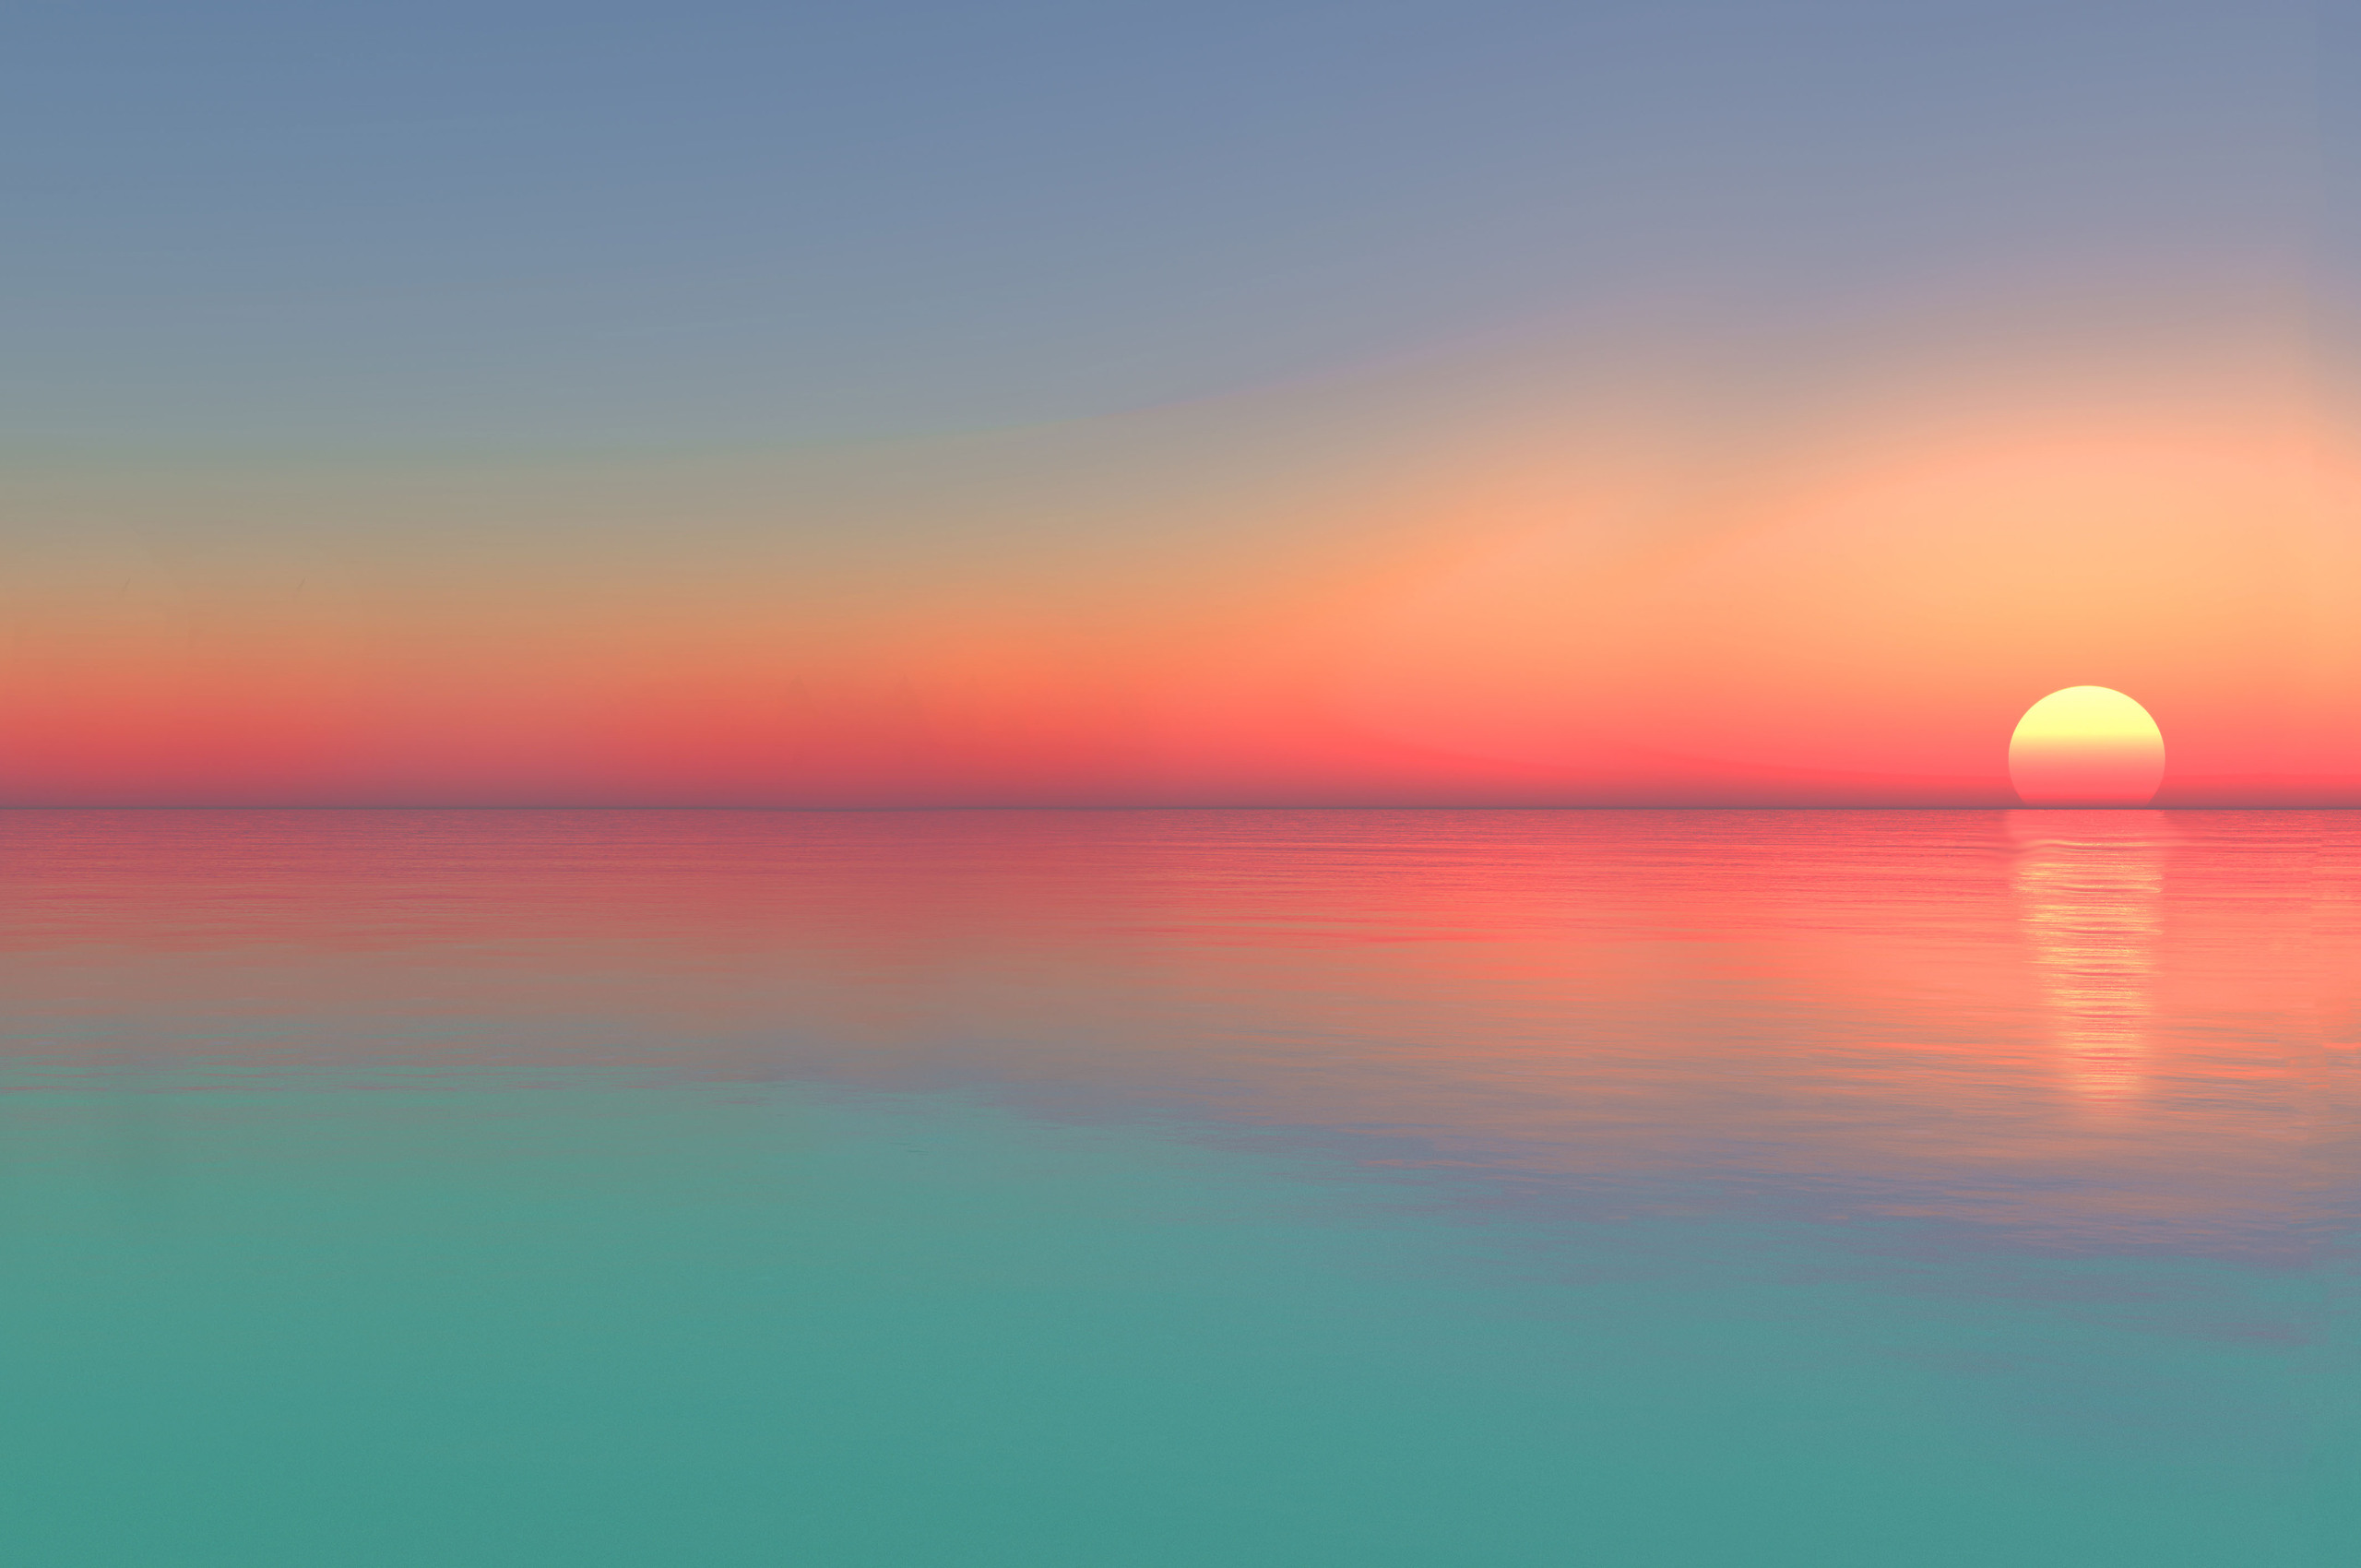 Sunset Ocean Wallpapers